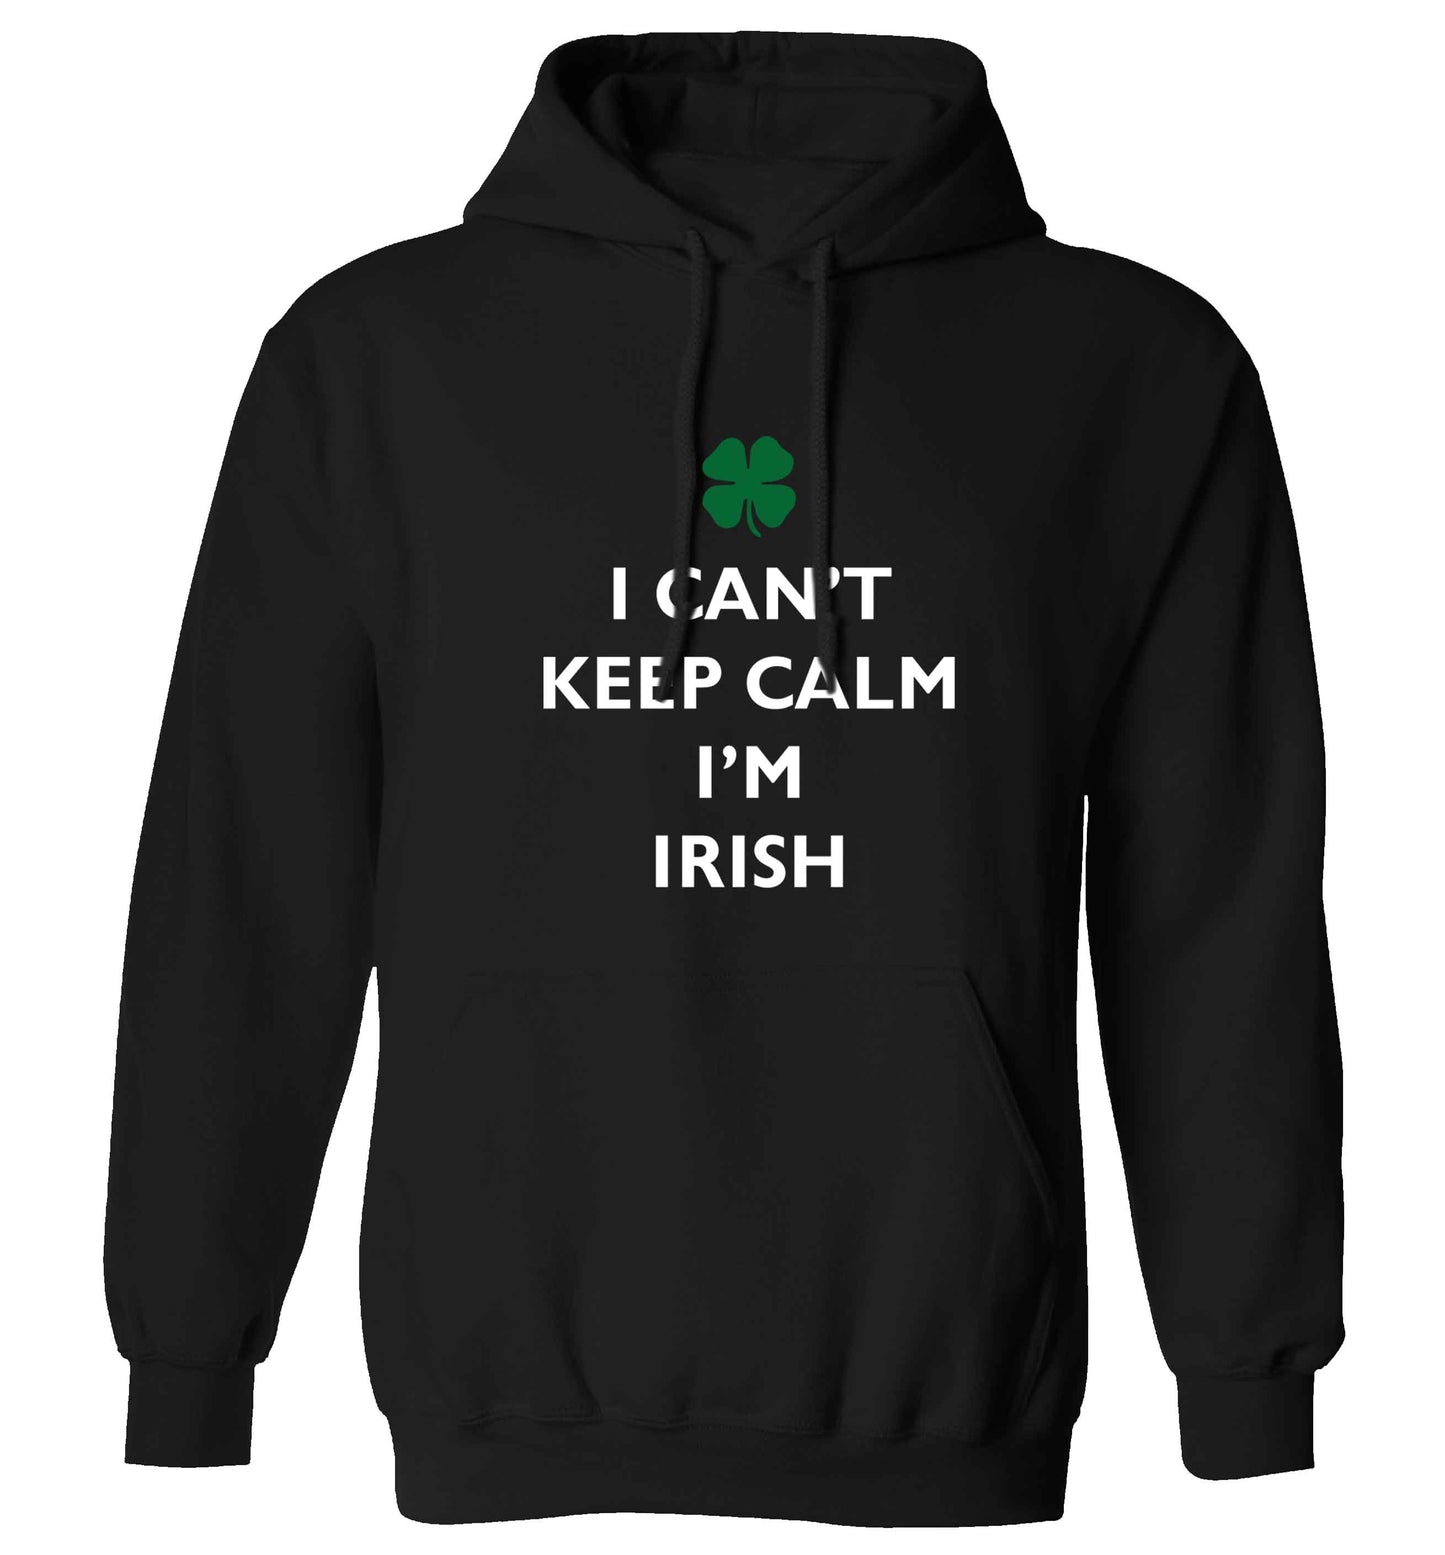 I can't keep calm I'm Irish adults unisex black hoodie 2XL